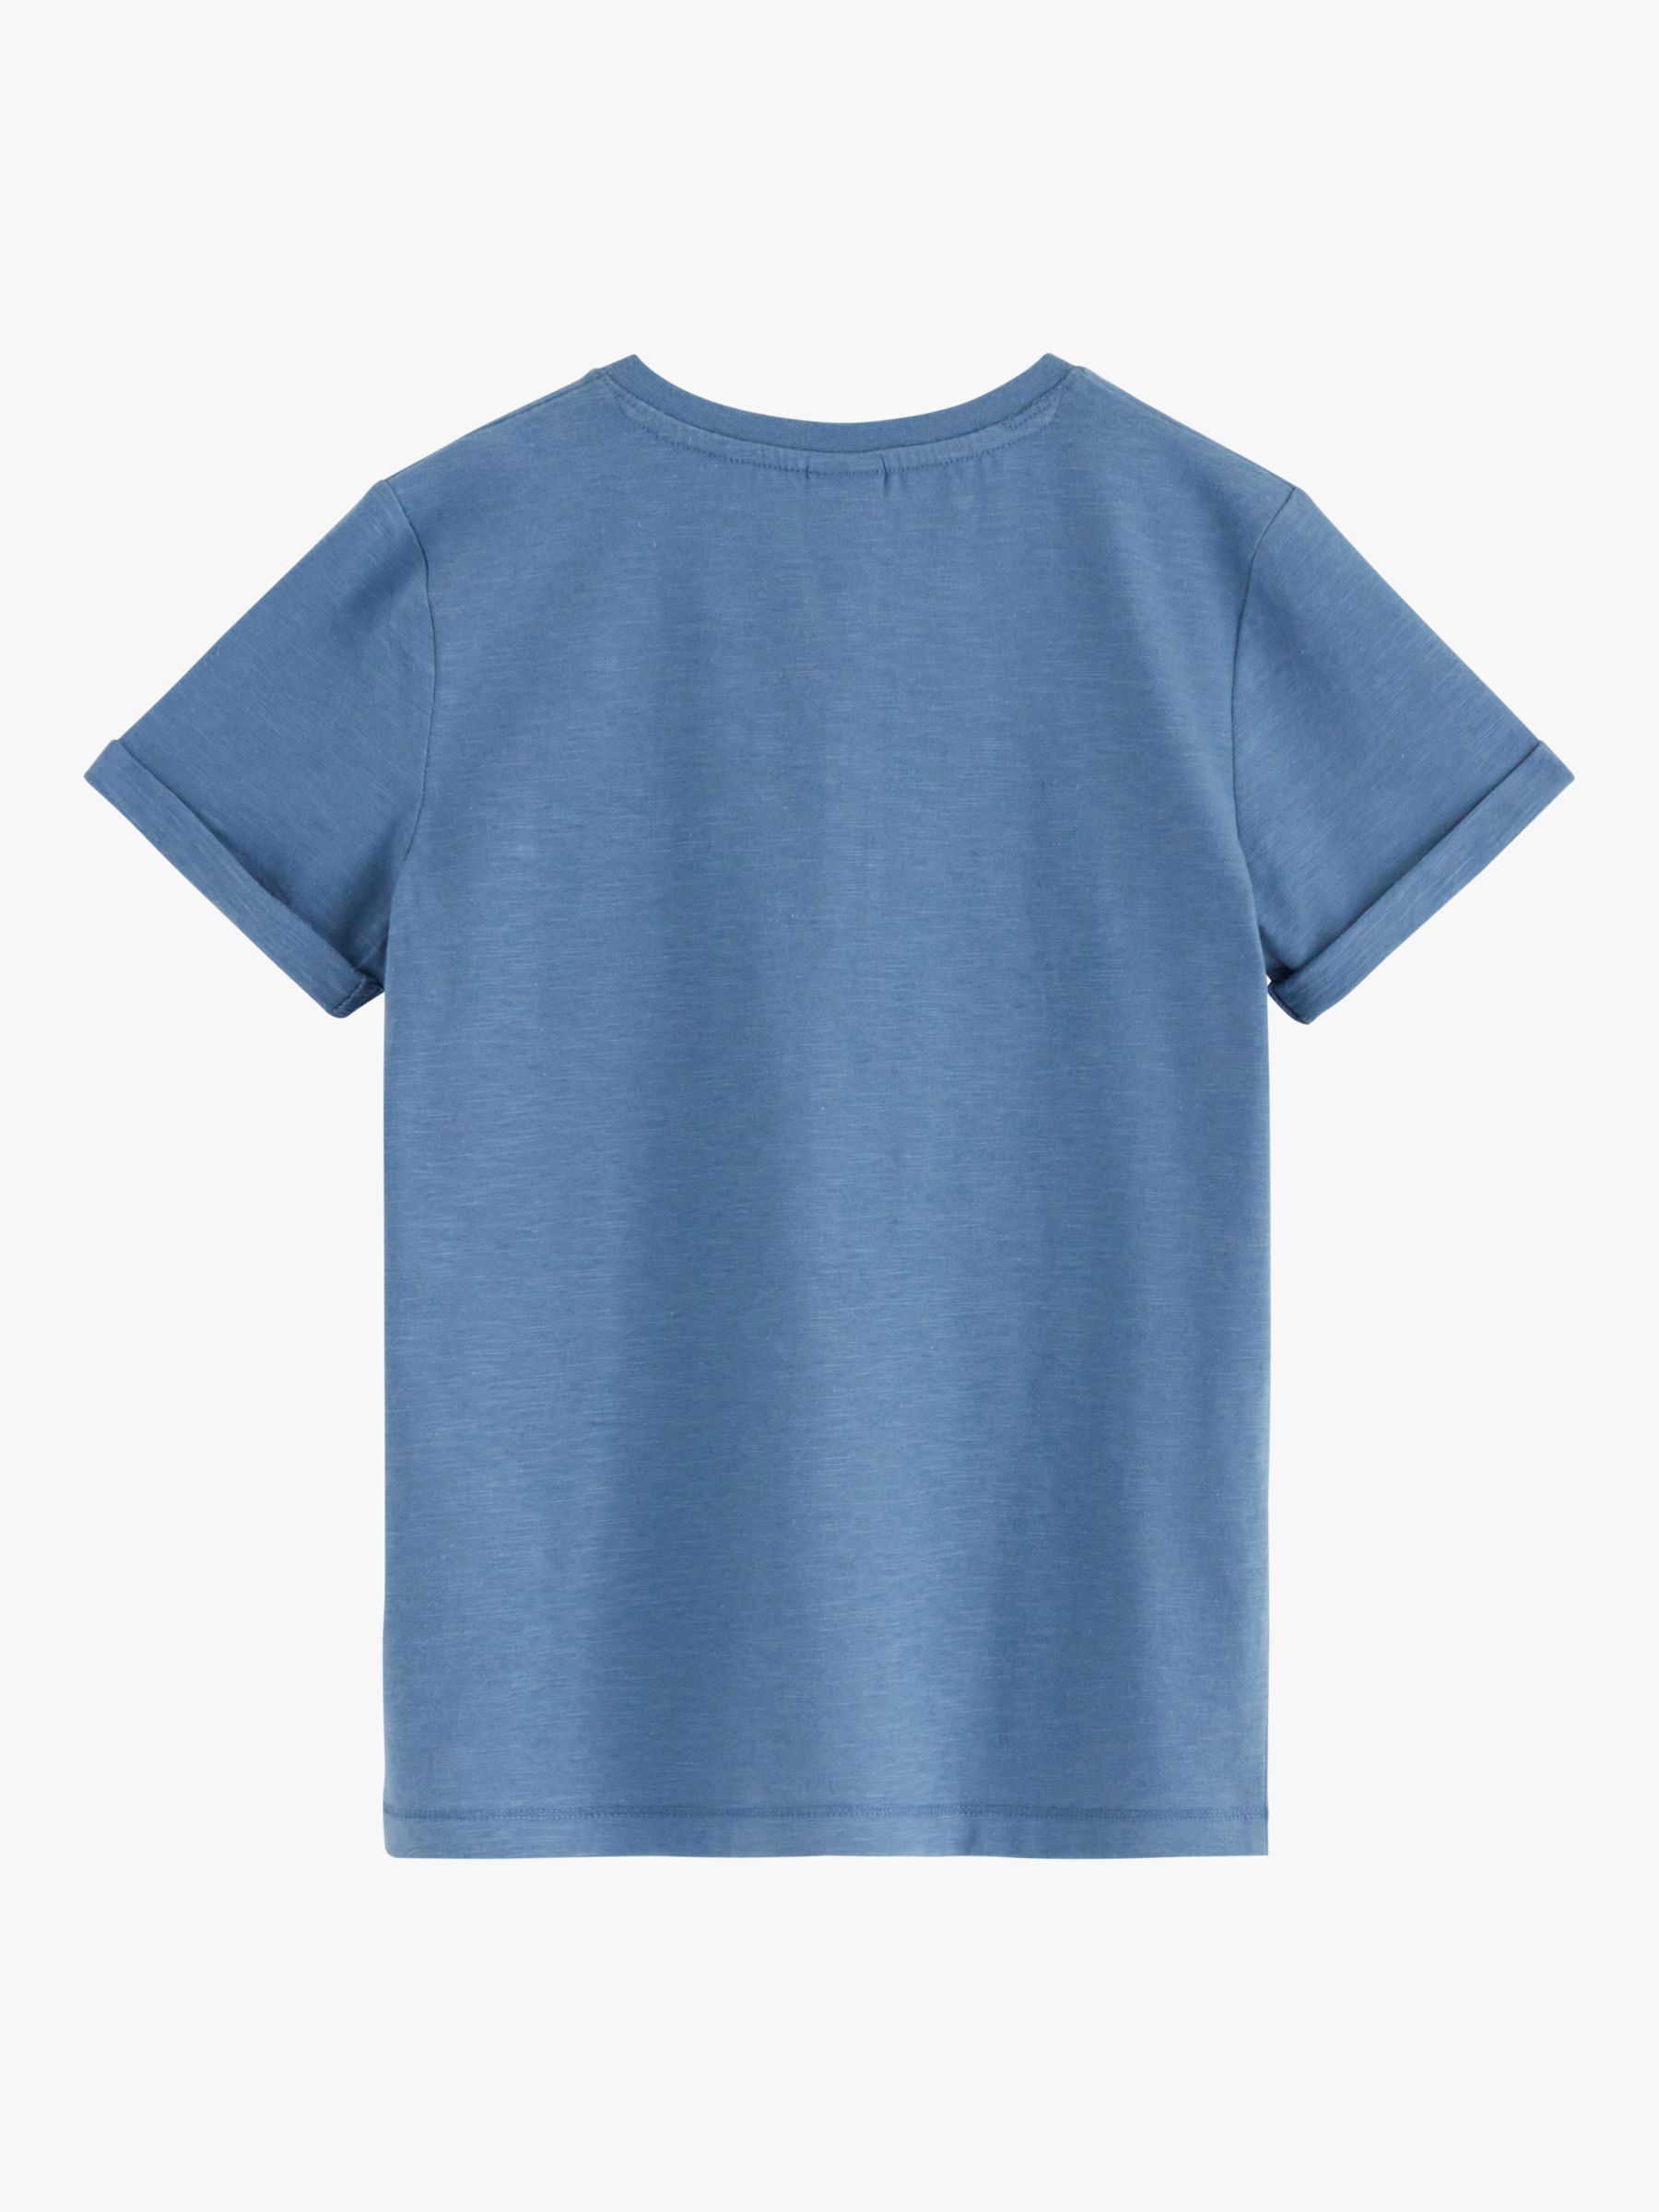 Lindex Kids' Organic Cotton Essential Short Sleeved Button Top, Dusty Blue, 18-24 months